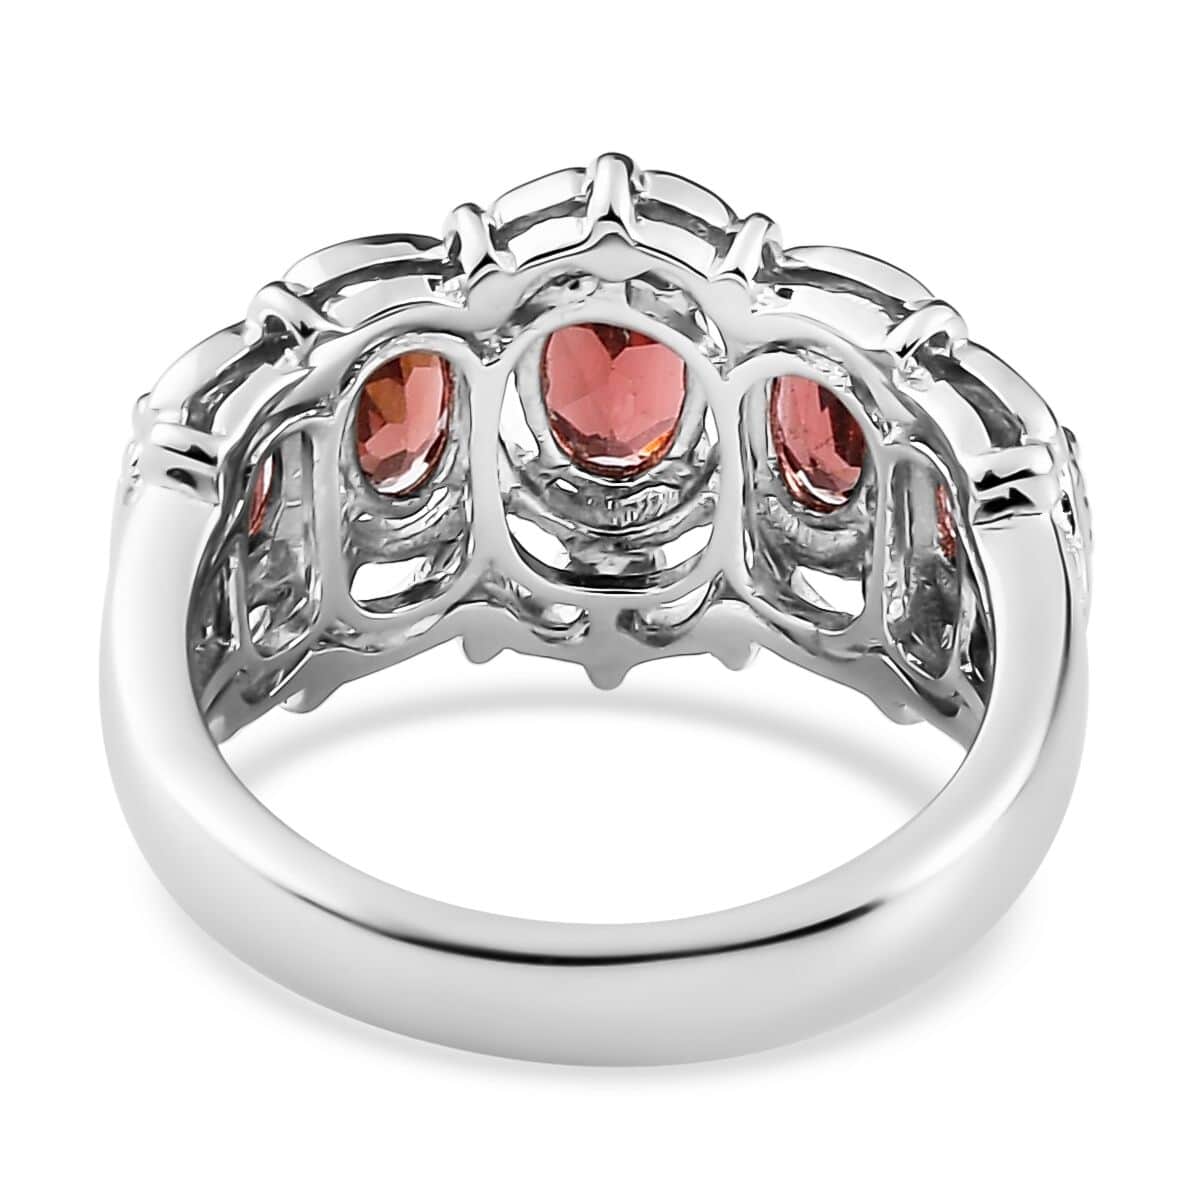 Karis Mozambique Garnet Ring in Platinum Bond, Five Stone Ring For Women, Engagement Rings 1.50 ctw (Size 7.0) image number 5